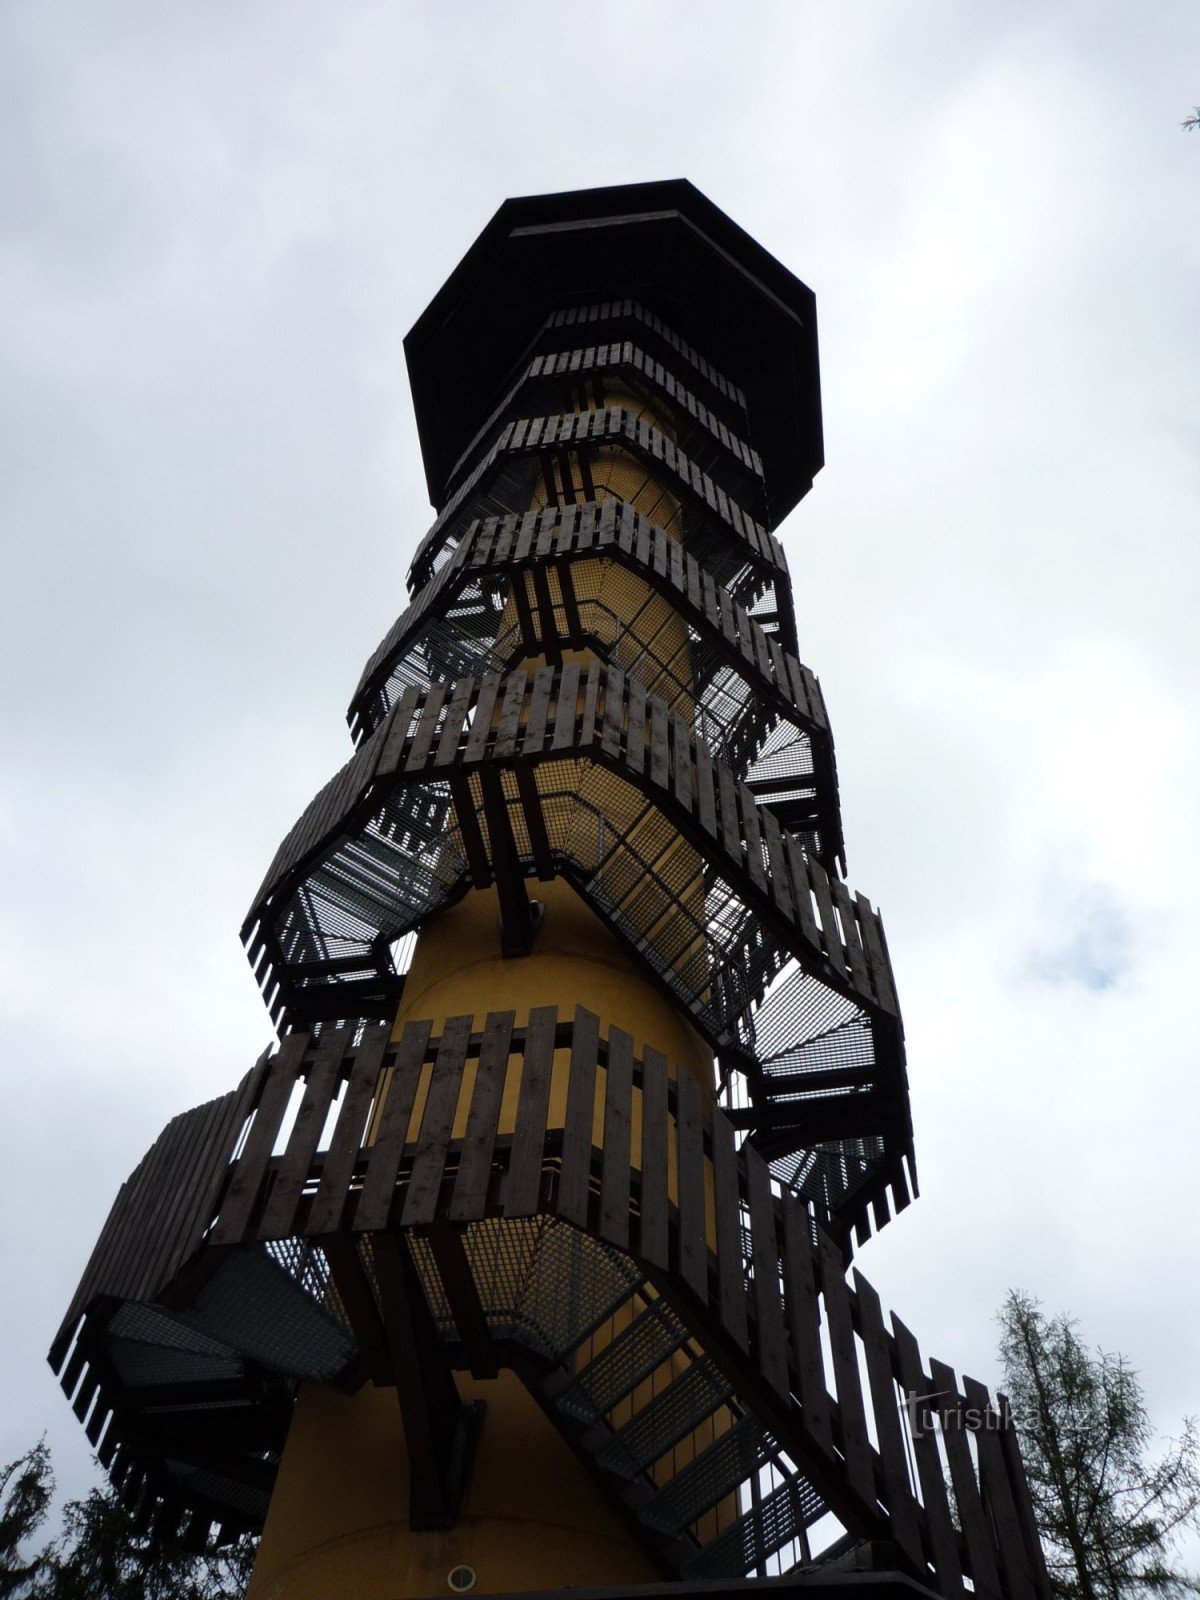 Drahoušek – uitkijktoren bij Osečany (PB)